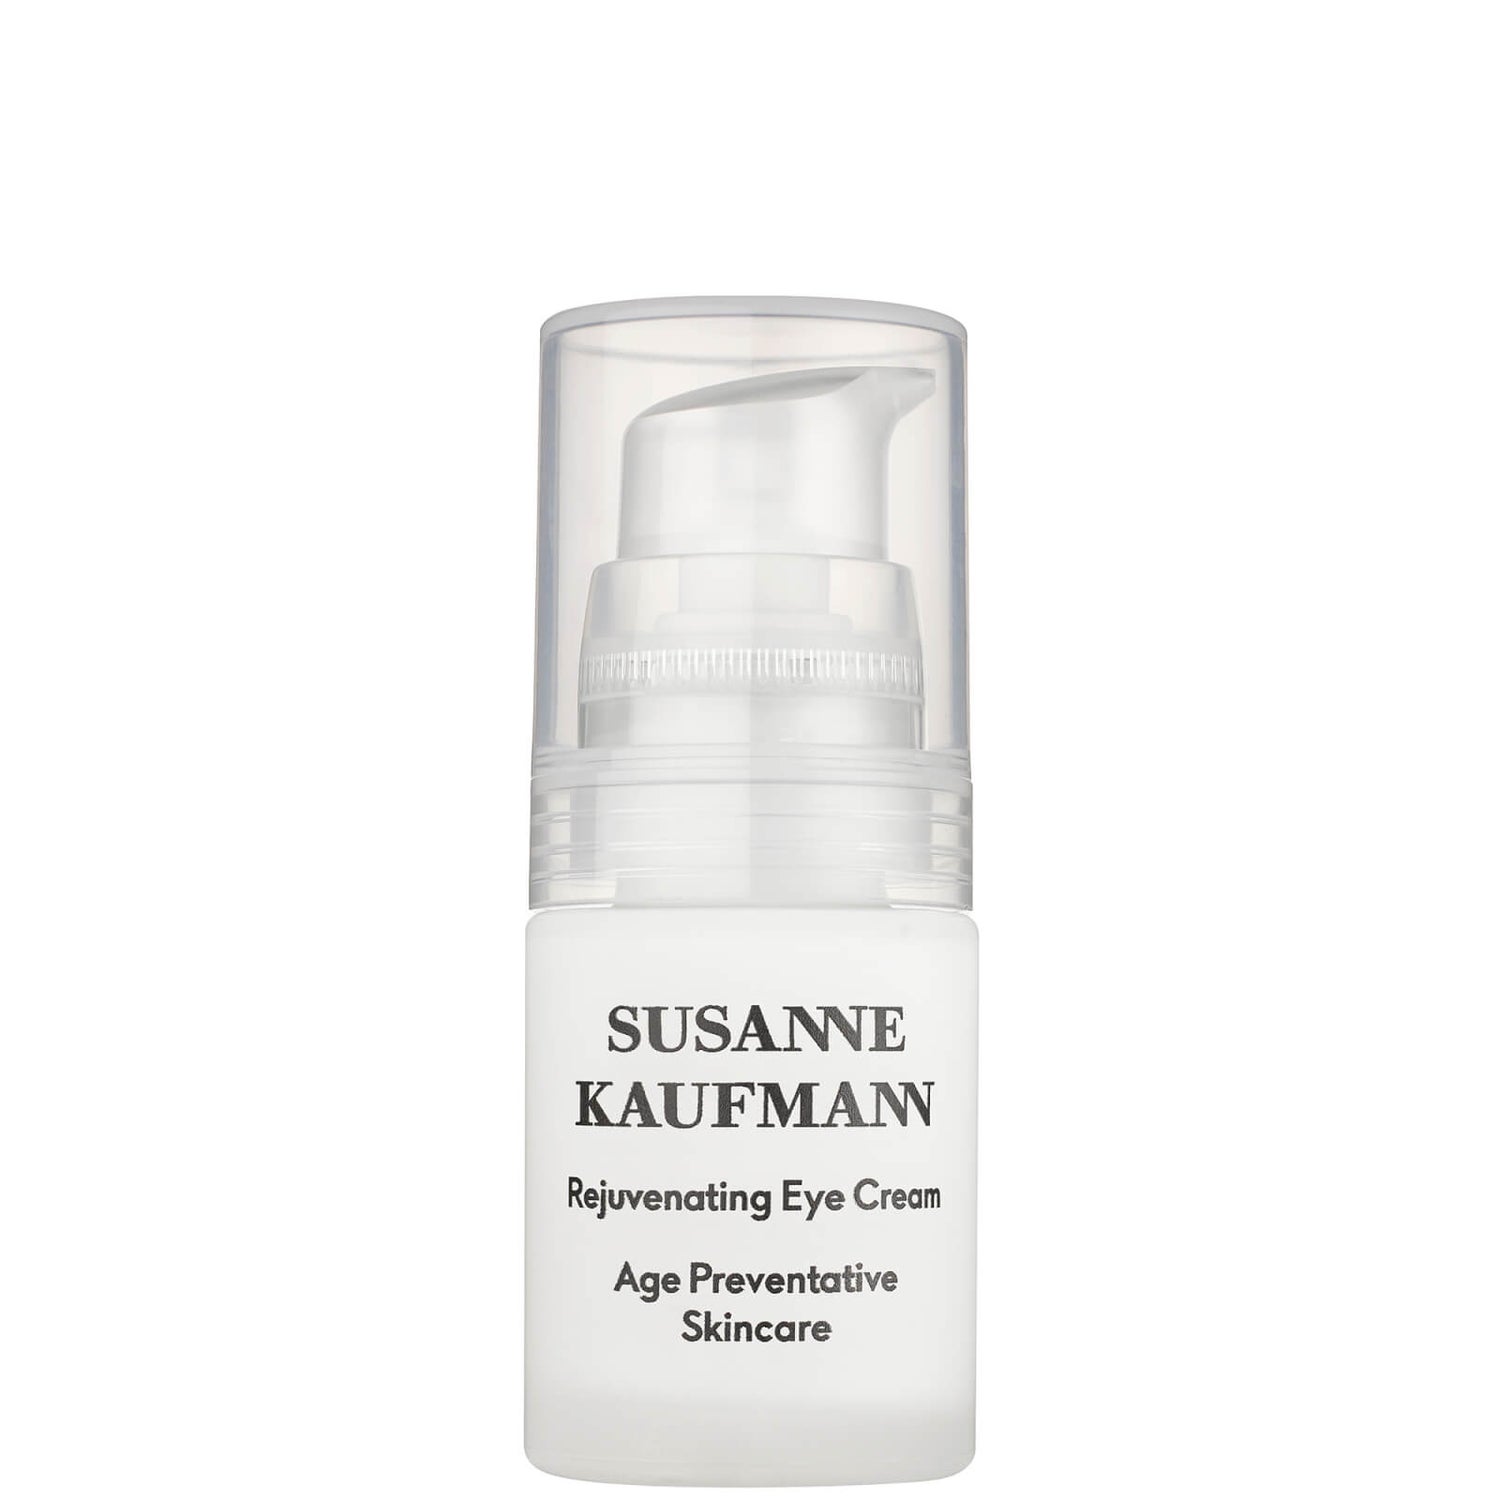 SUSANNE KAUFMANN Rejuvenating Eye Cream 15ml